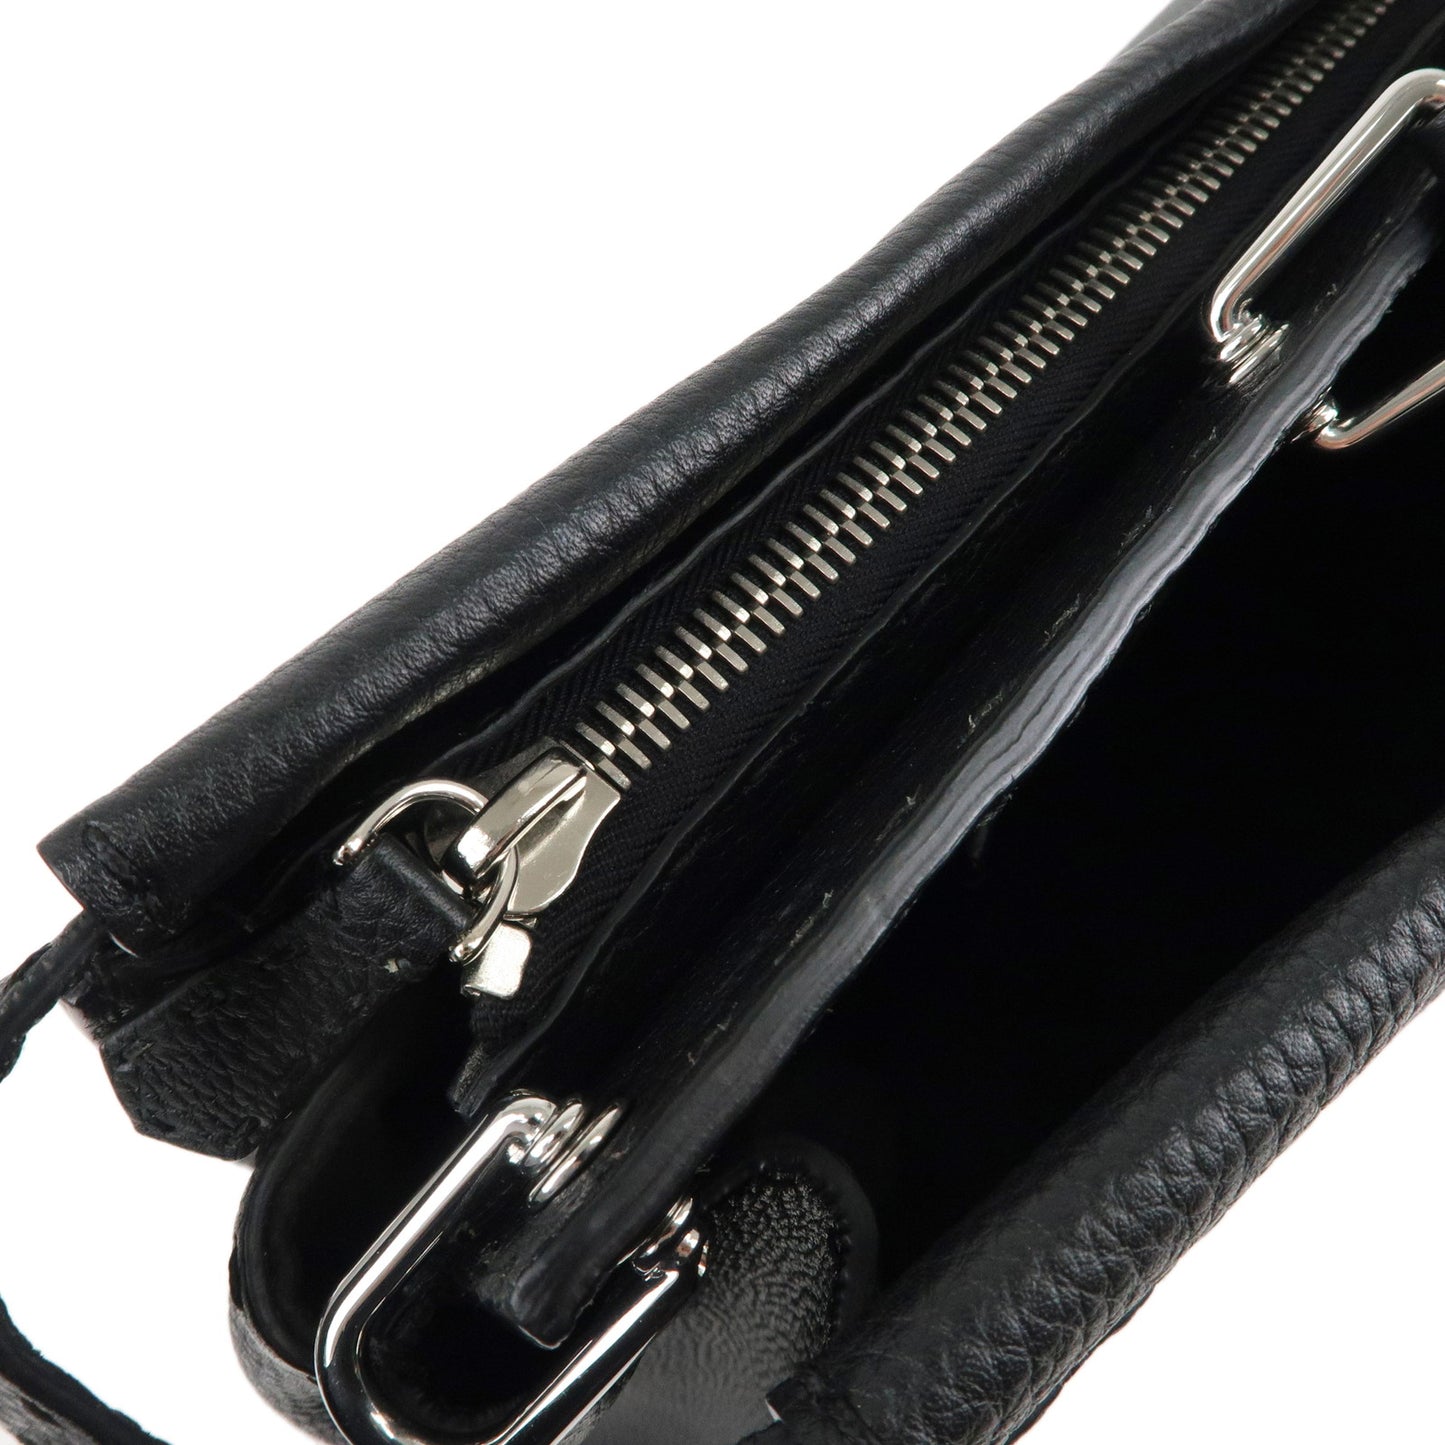 Zip-Around Selleria - Black leather wallet